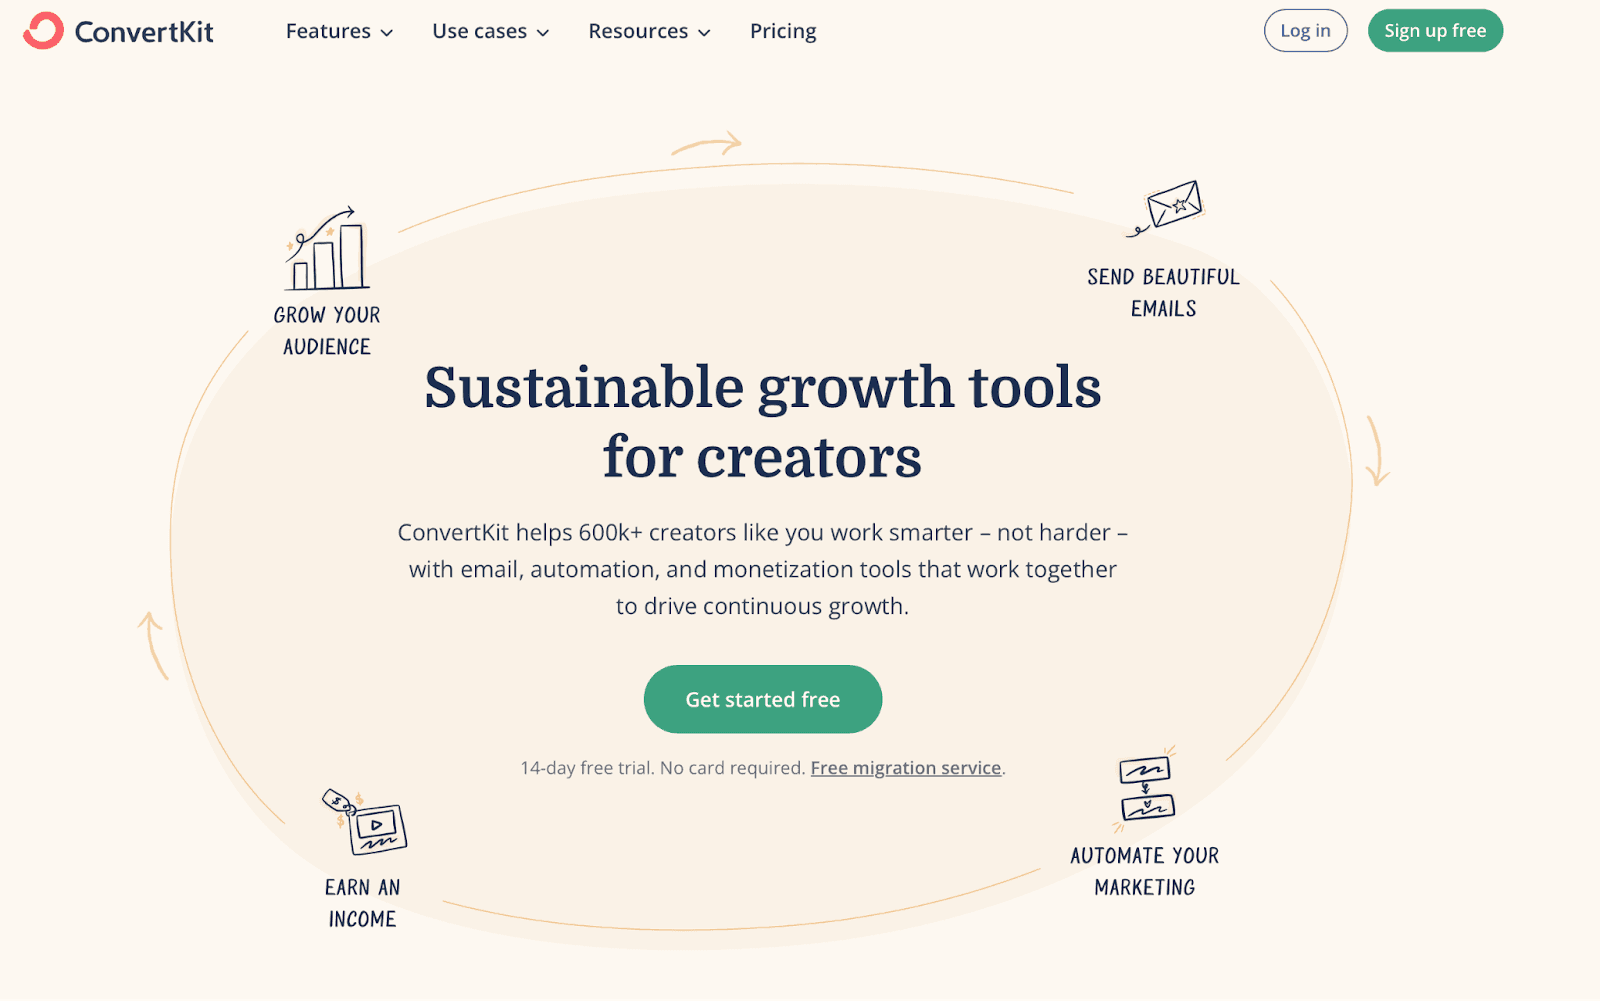 ConvertKit website - Sustainable growth tools for creators